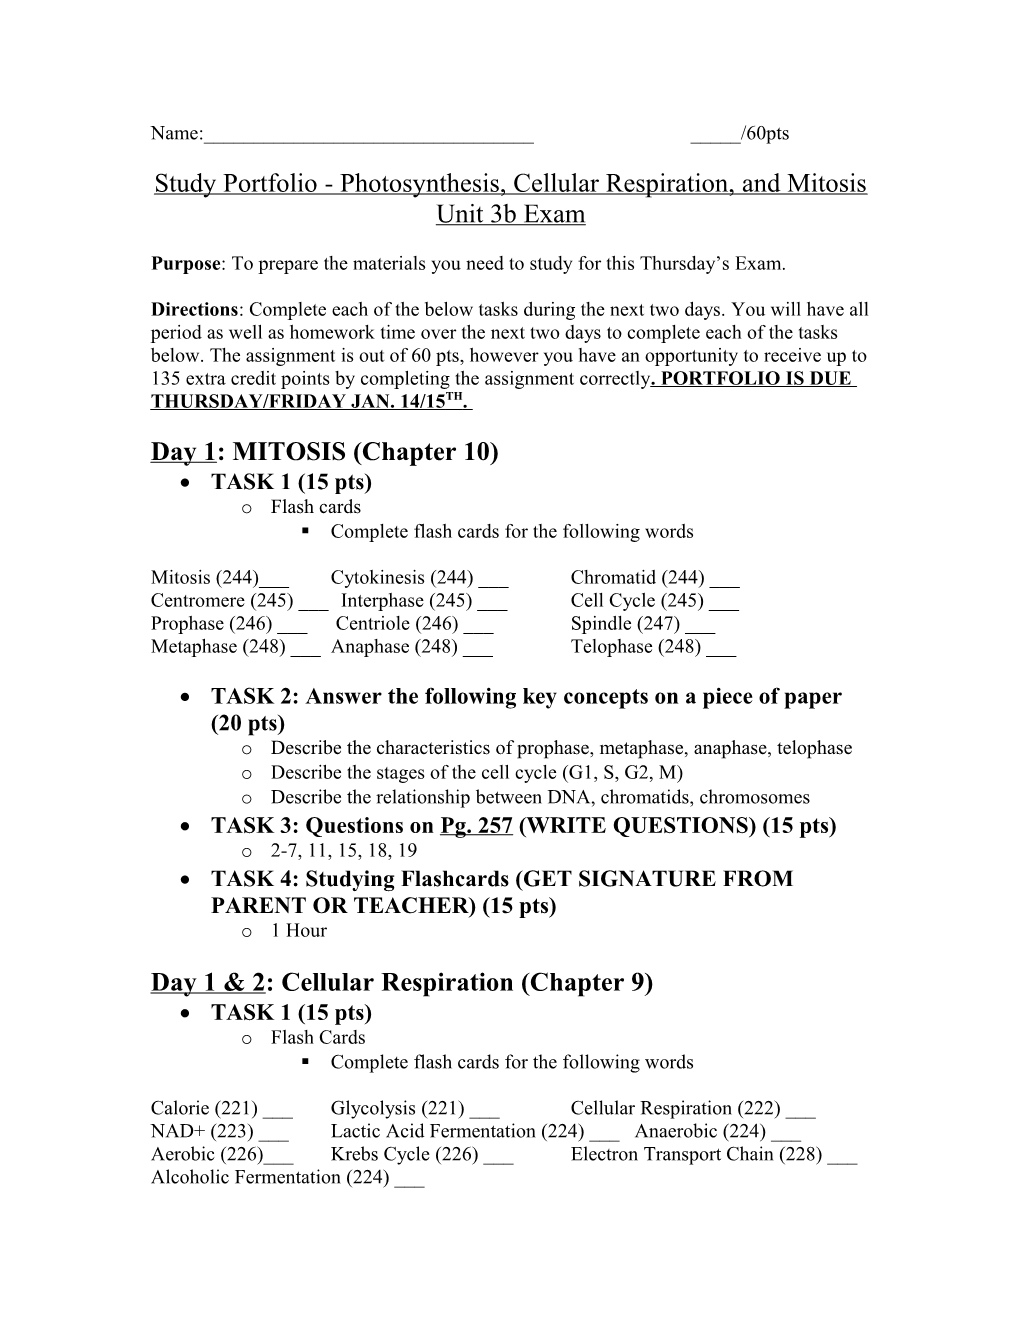 Study Portfolio - Photosynthesis, Cellular Respiration, and Mitosis Unit 3B Exam